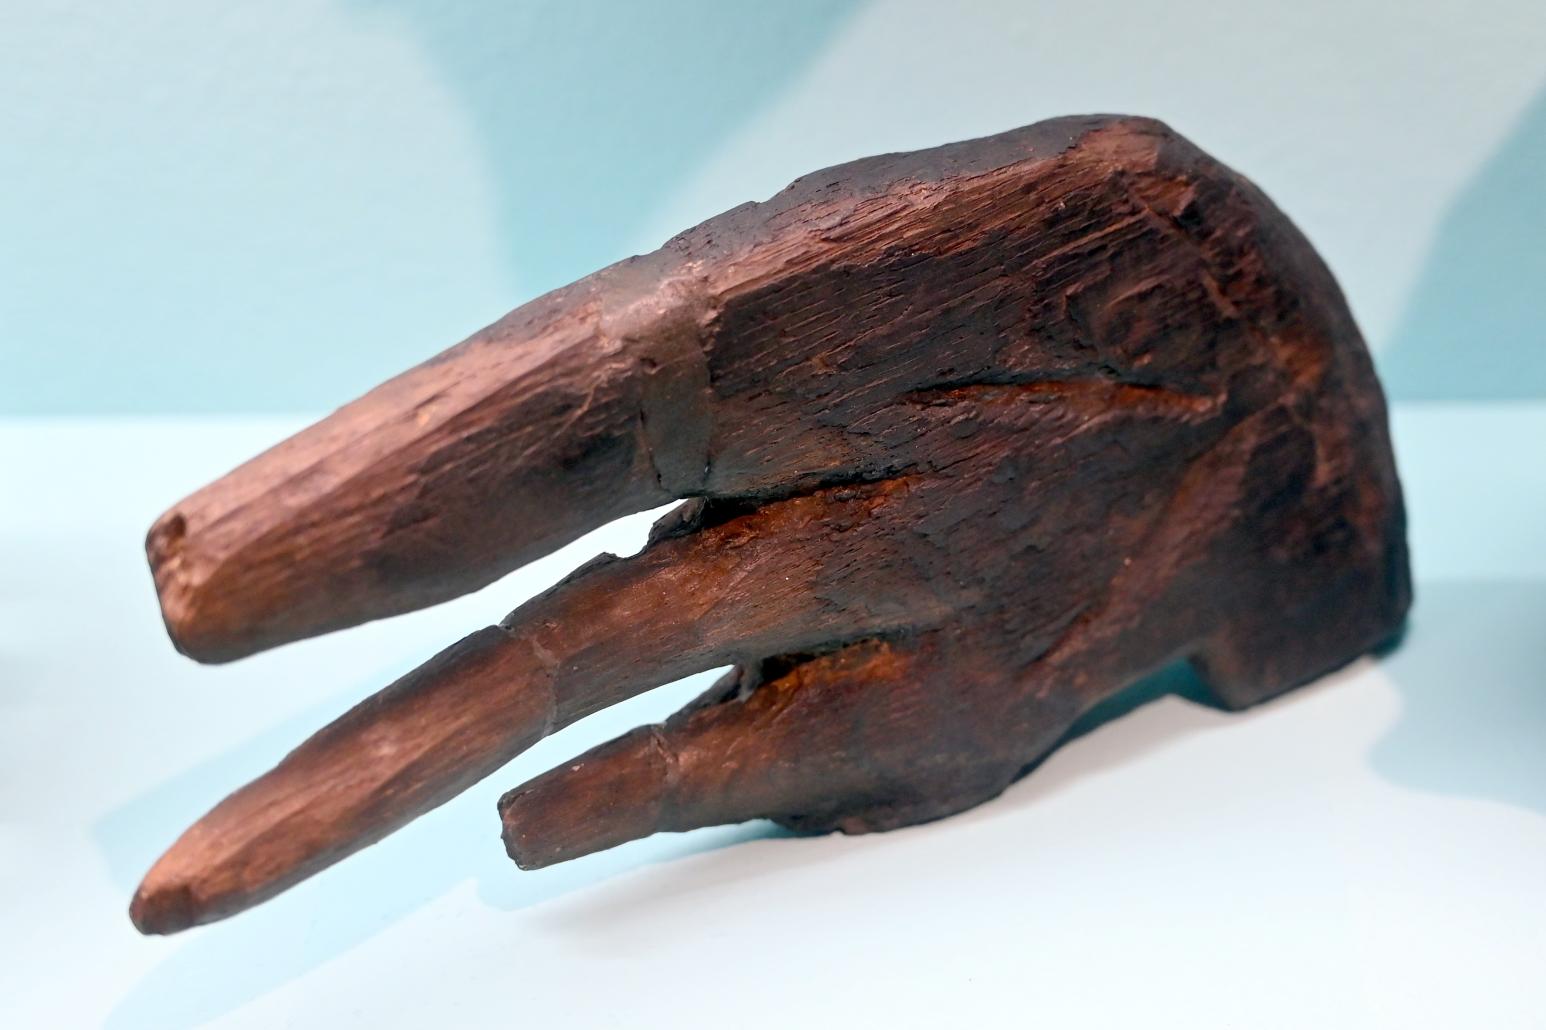 Holzgerät mit Zinken, Neolithikum (Jungsteinzeit), 5500 - 1700 v. Chr., 5300 - 4950 v. Chr., Bild 1/2